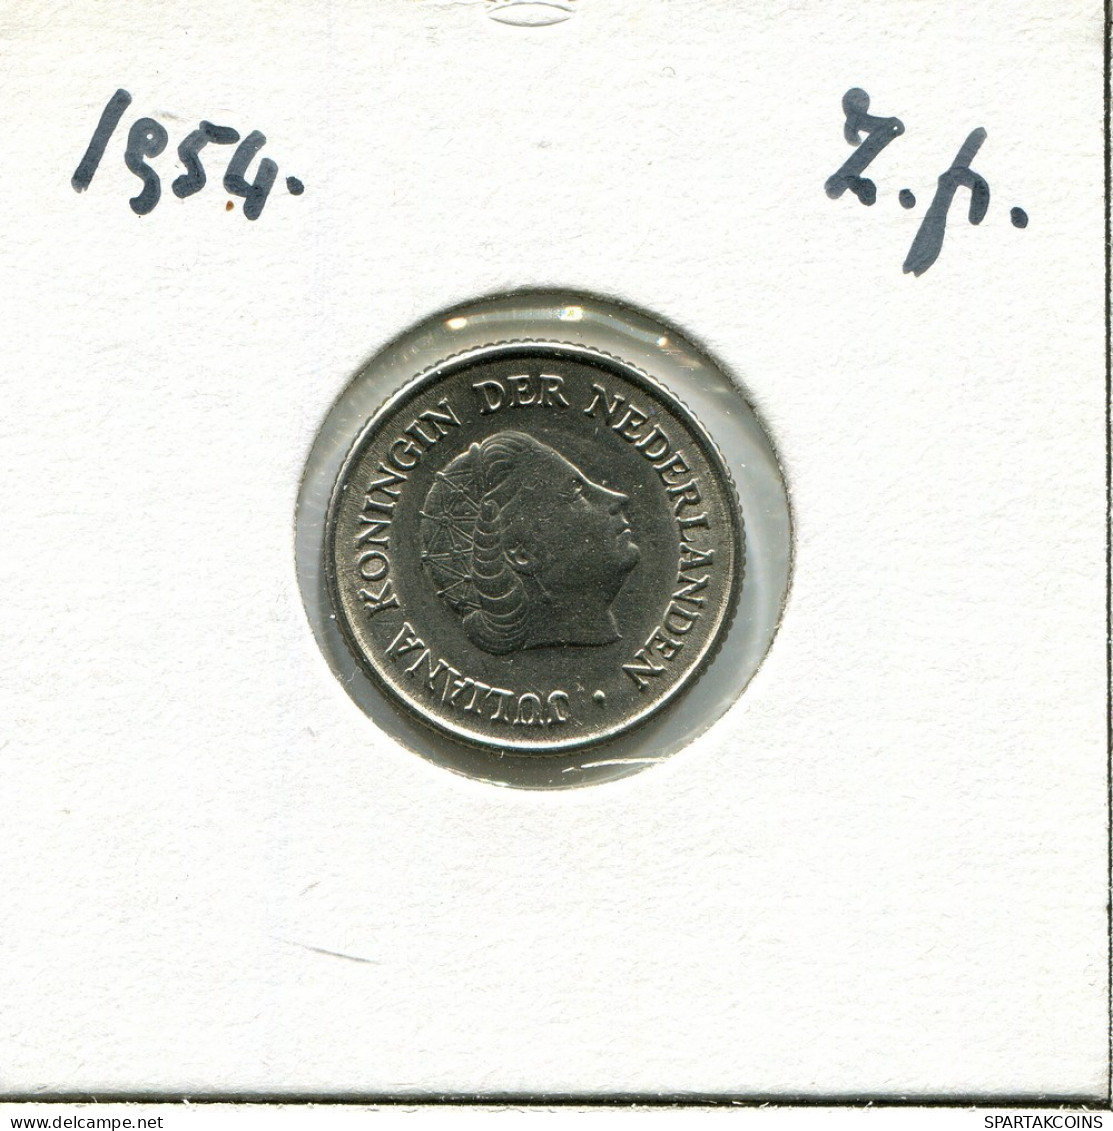 25 CENTS 1954 NEERLANDÉS NETHERLANDS Moneda #AU530.E.A - 1948-1980: Juliana